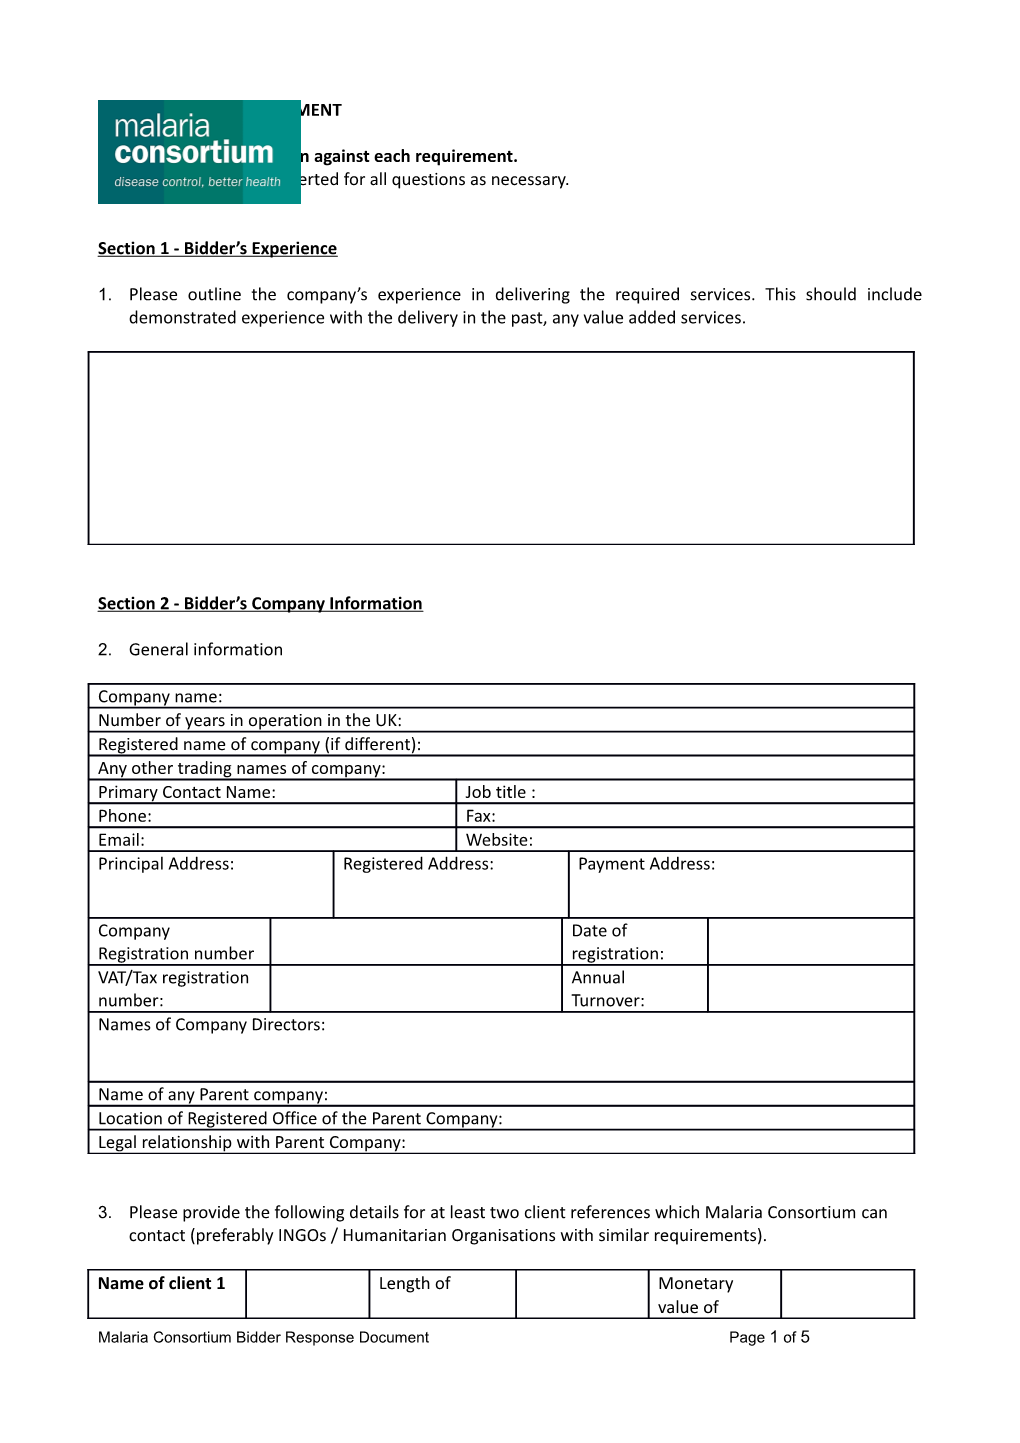 RFP Bidder Response Document Sample